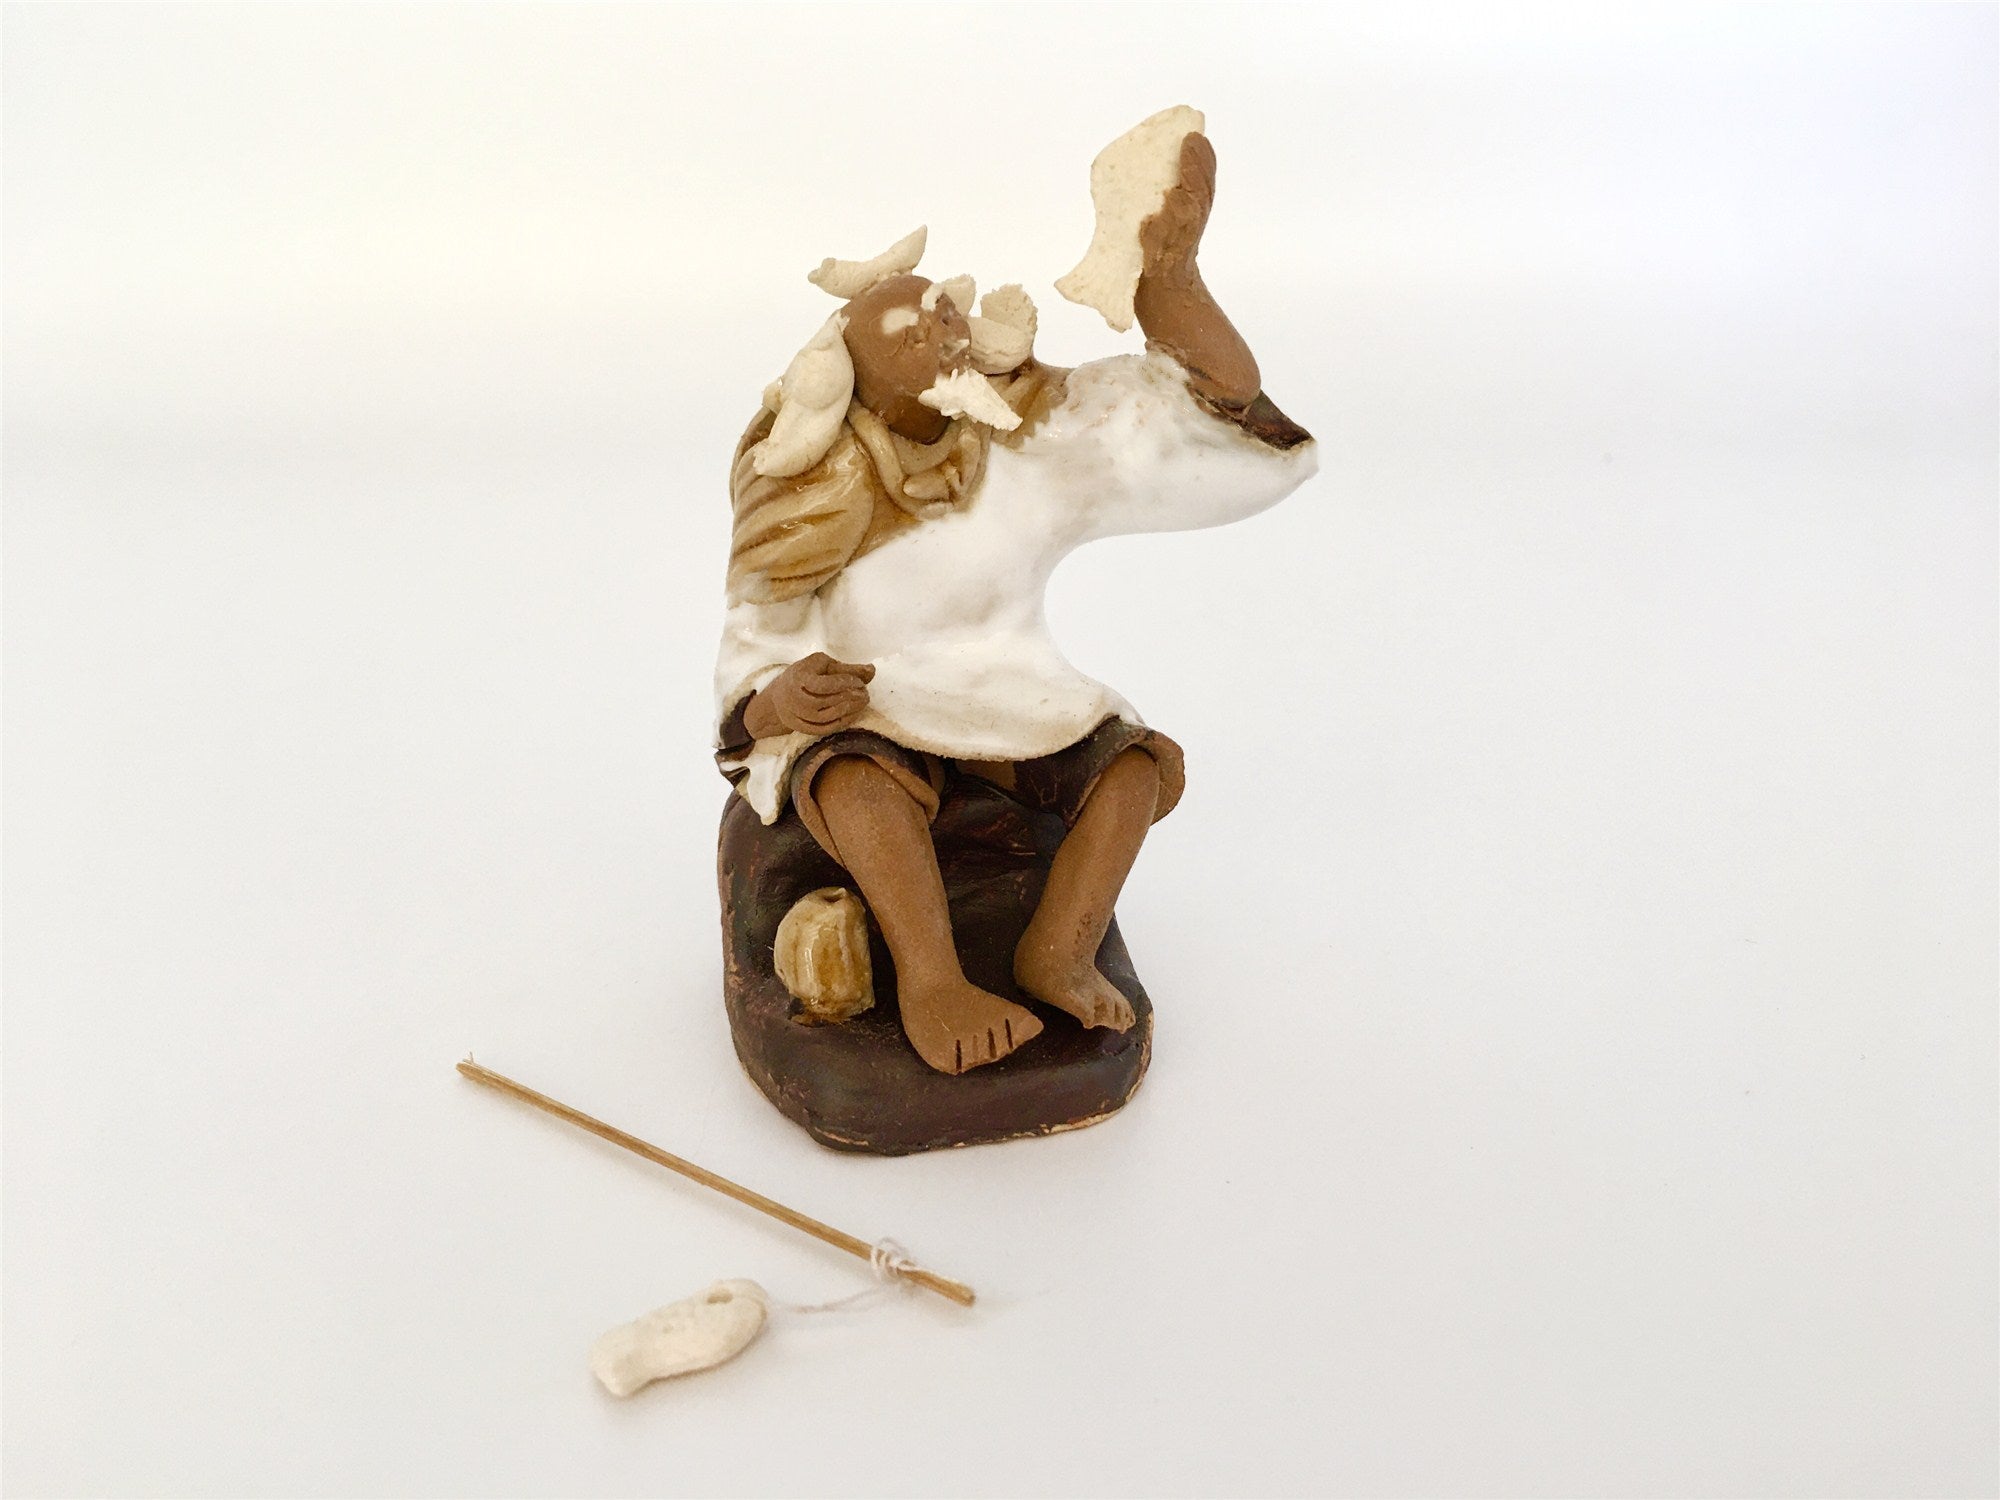 Ceramic Figurine -  Fisherman With Fishing pole 1.25‘’x 2.75''  white ,Posture A